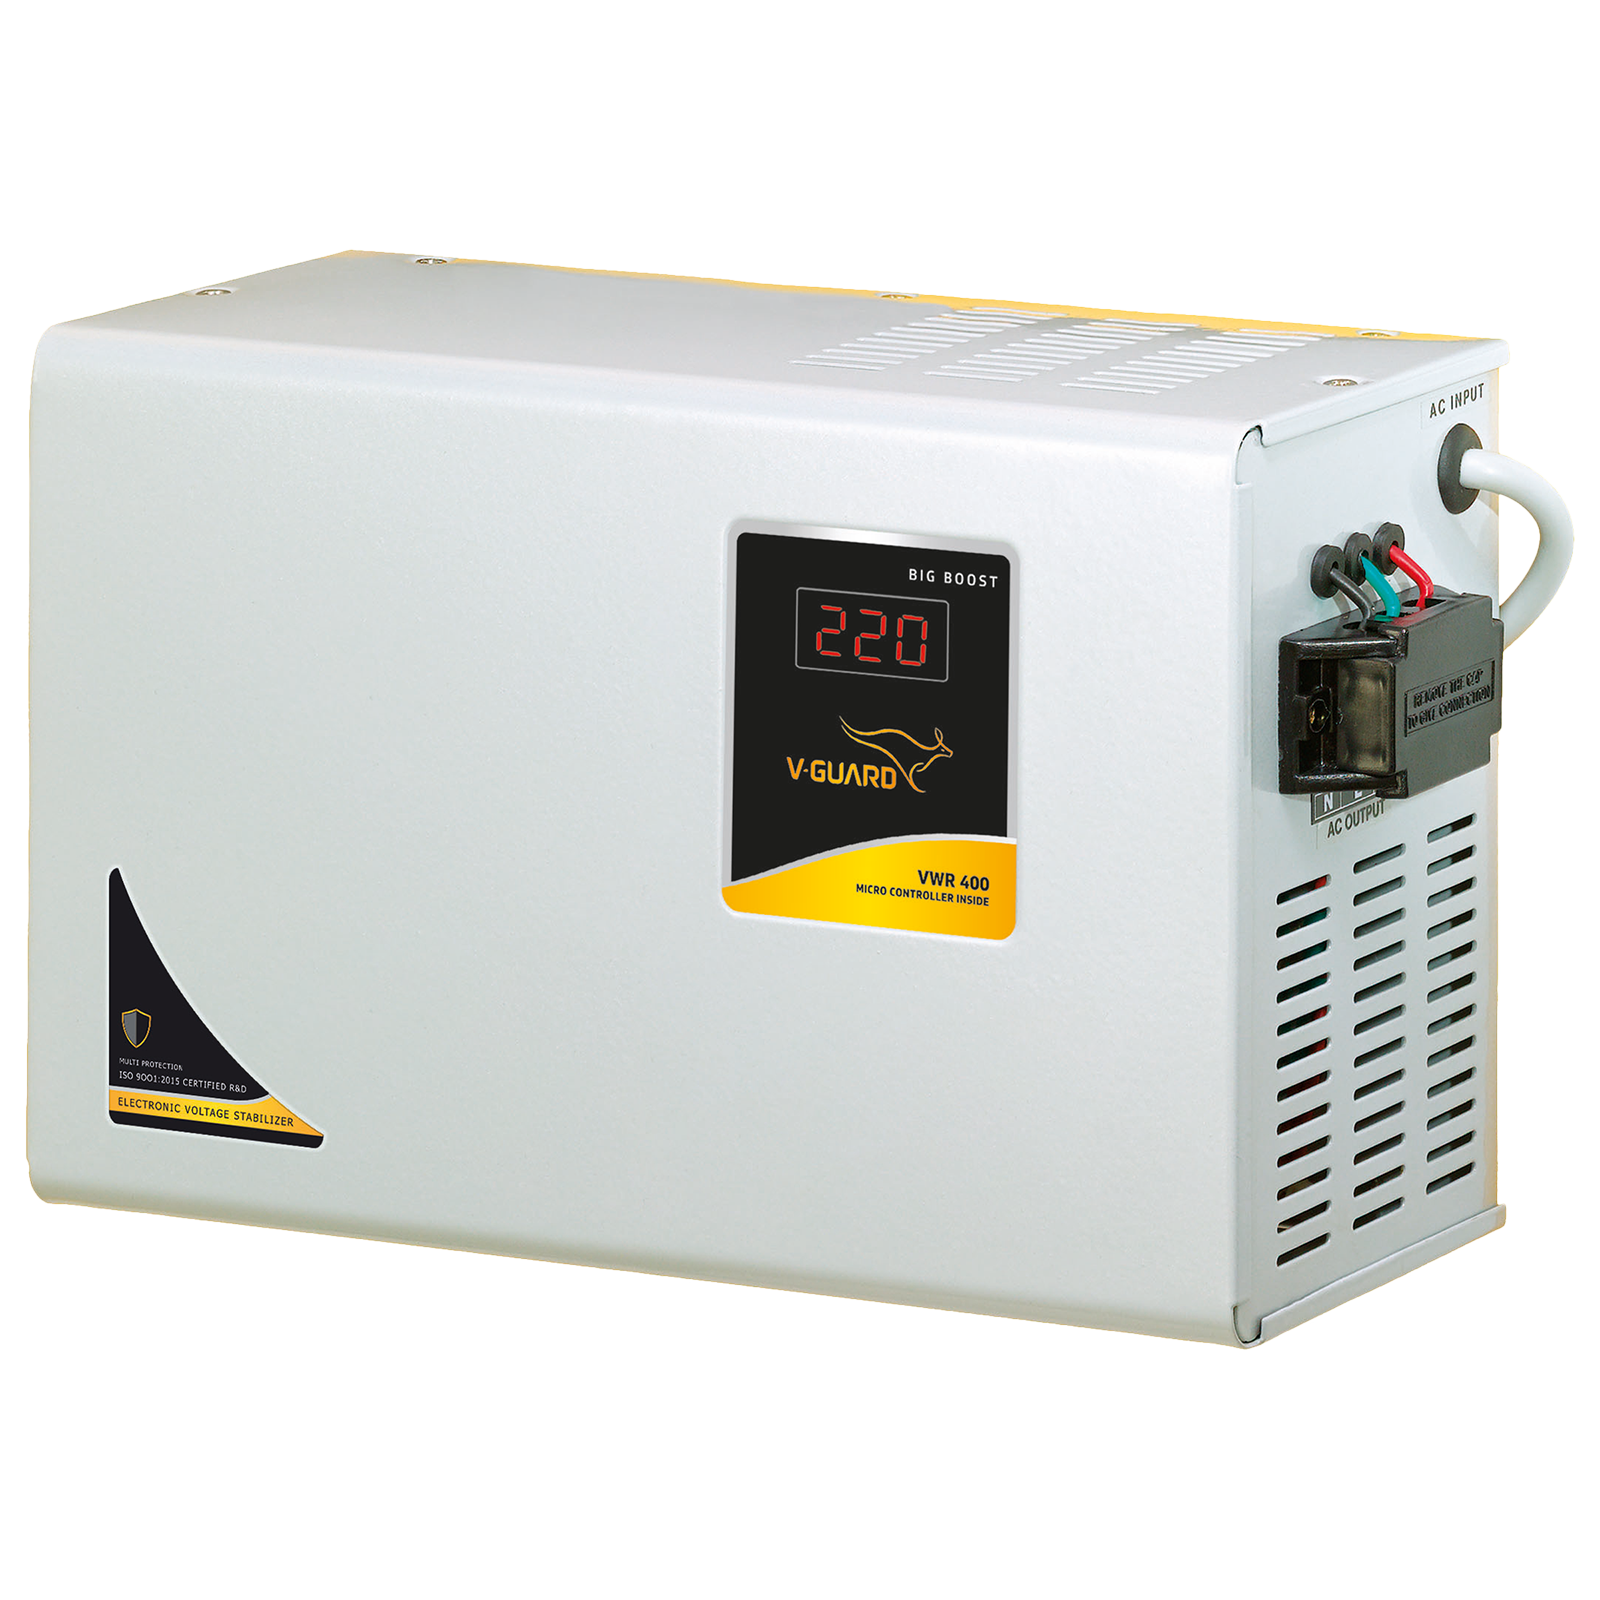 Buy Premier Slimline Double Boost 12 Amps Voltage Stabilizer For Up to 1.5  Ton AC (200 V - 240 V, Digital Display, 4KVA, White) Online - Croma